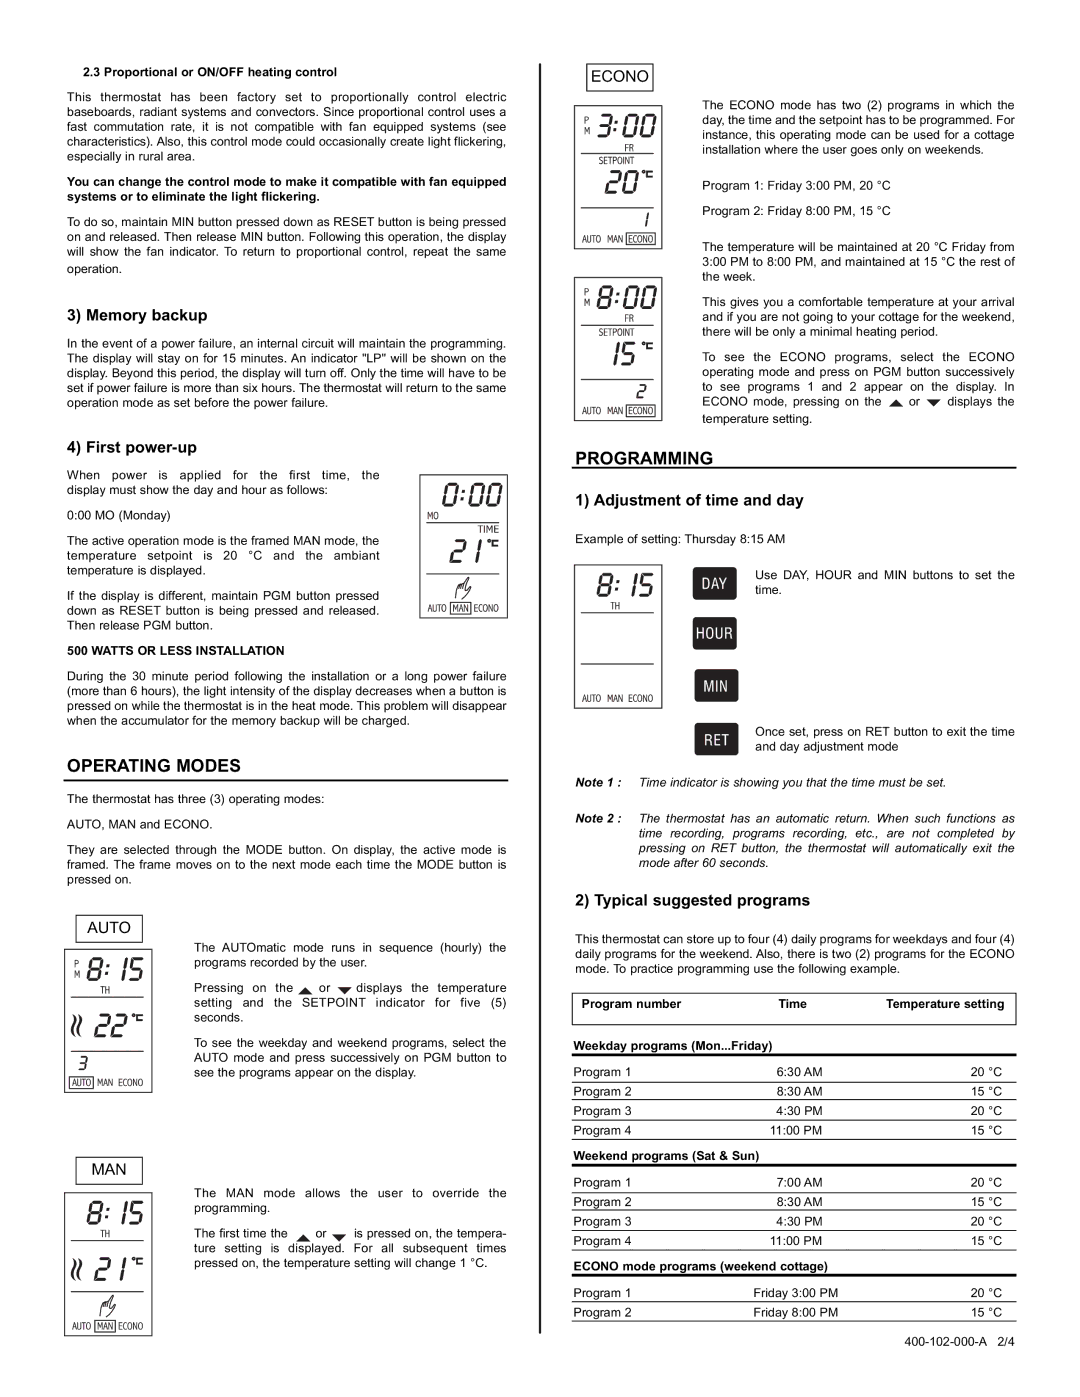 Aube Technologies TH102-3 manual Operating Modes, Programming 